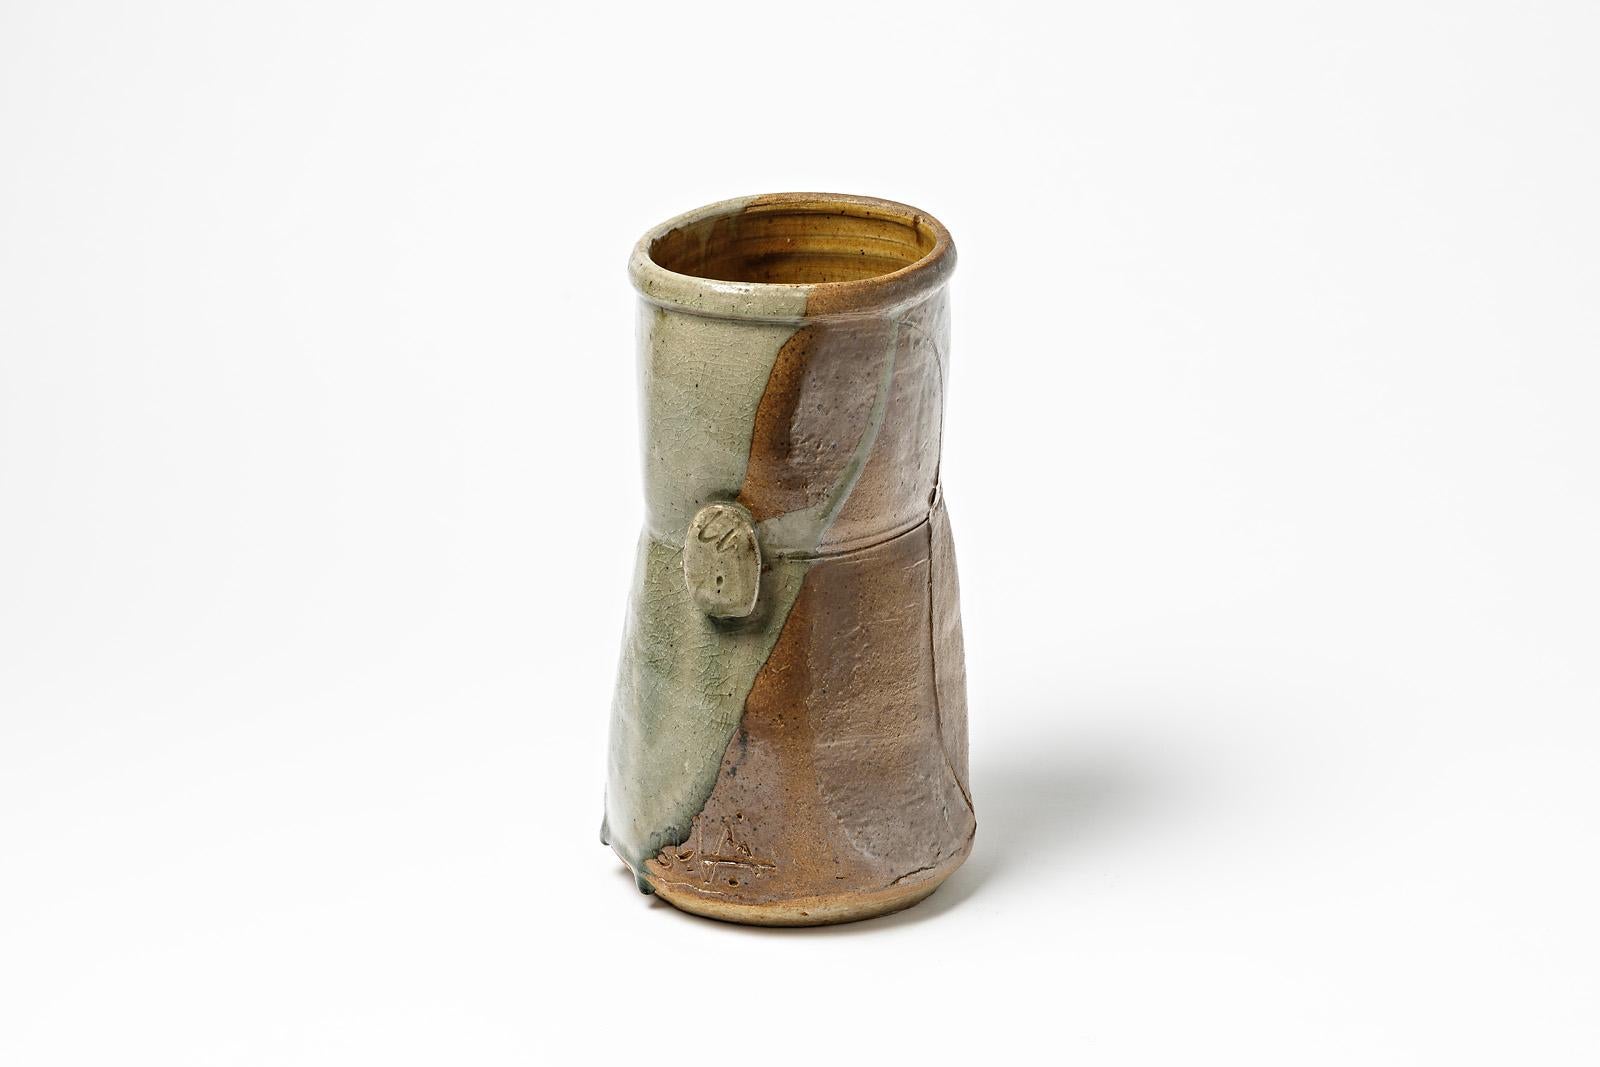 French Modern Stoneware Ceramic Vase by Astoul in La Borne 1982 Shinny Grey Color For Sale